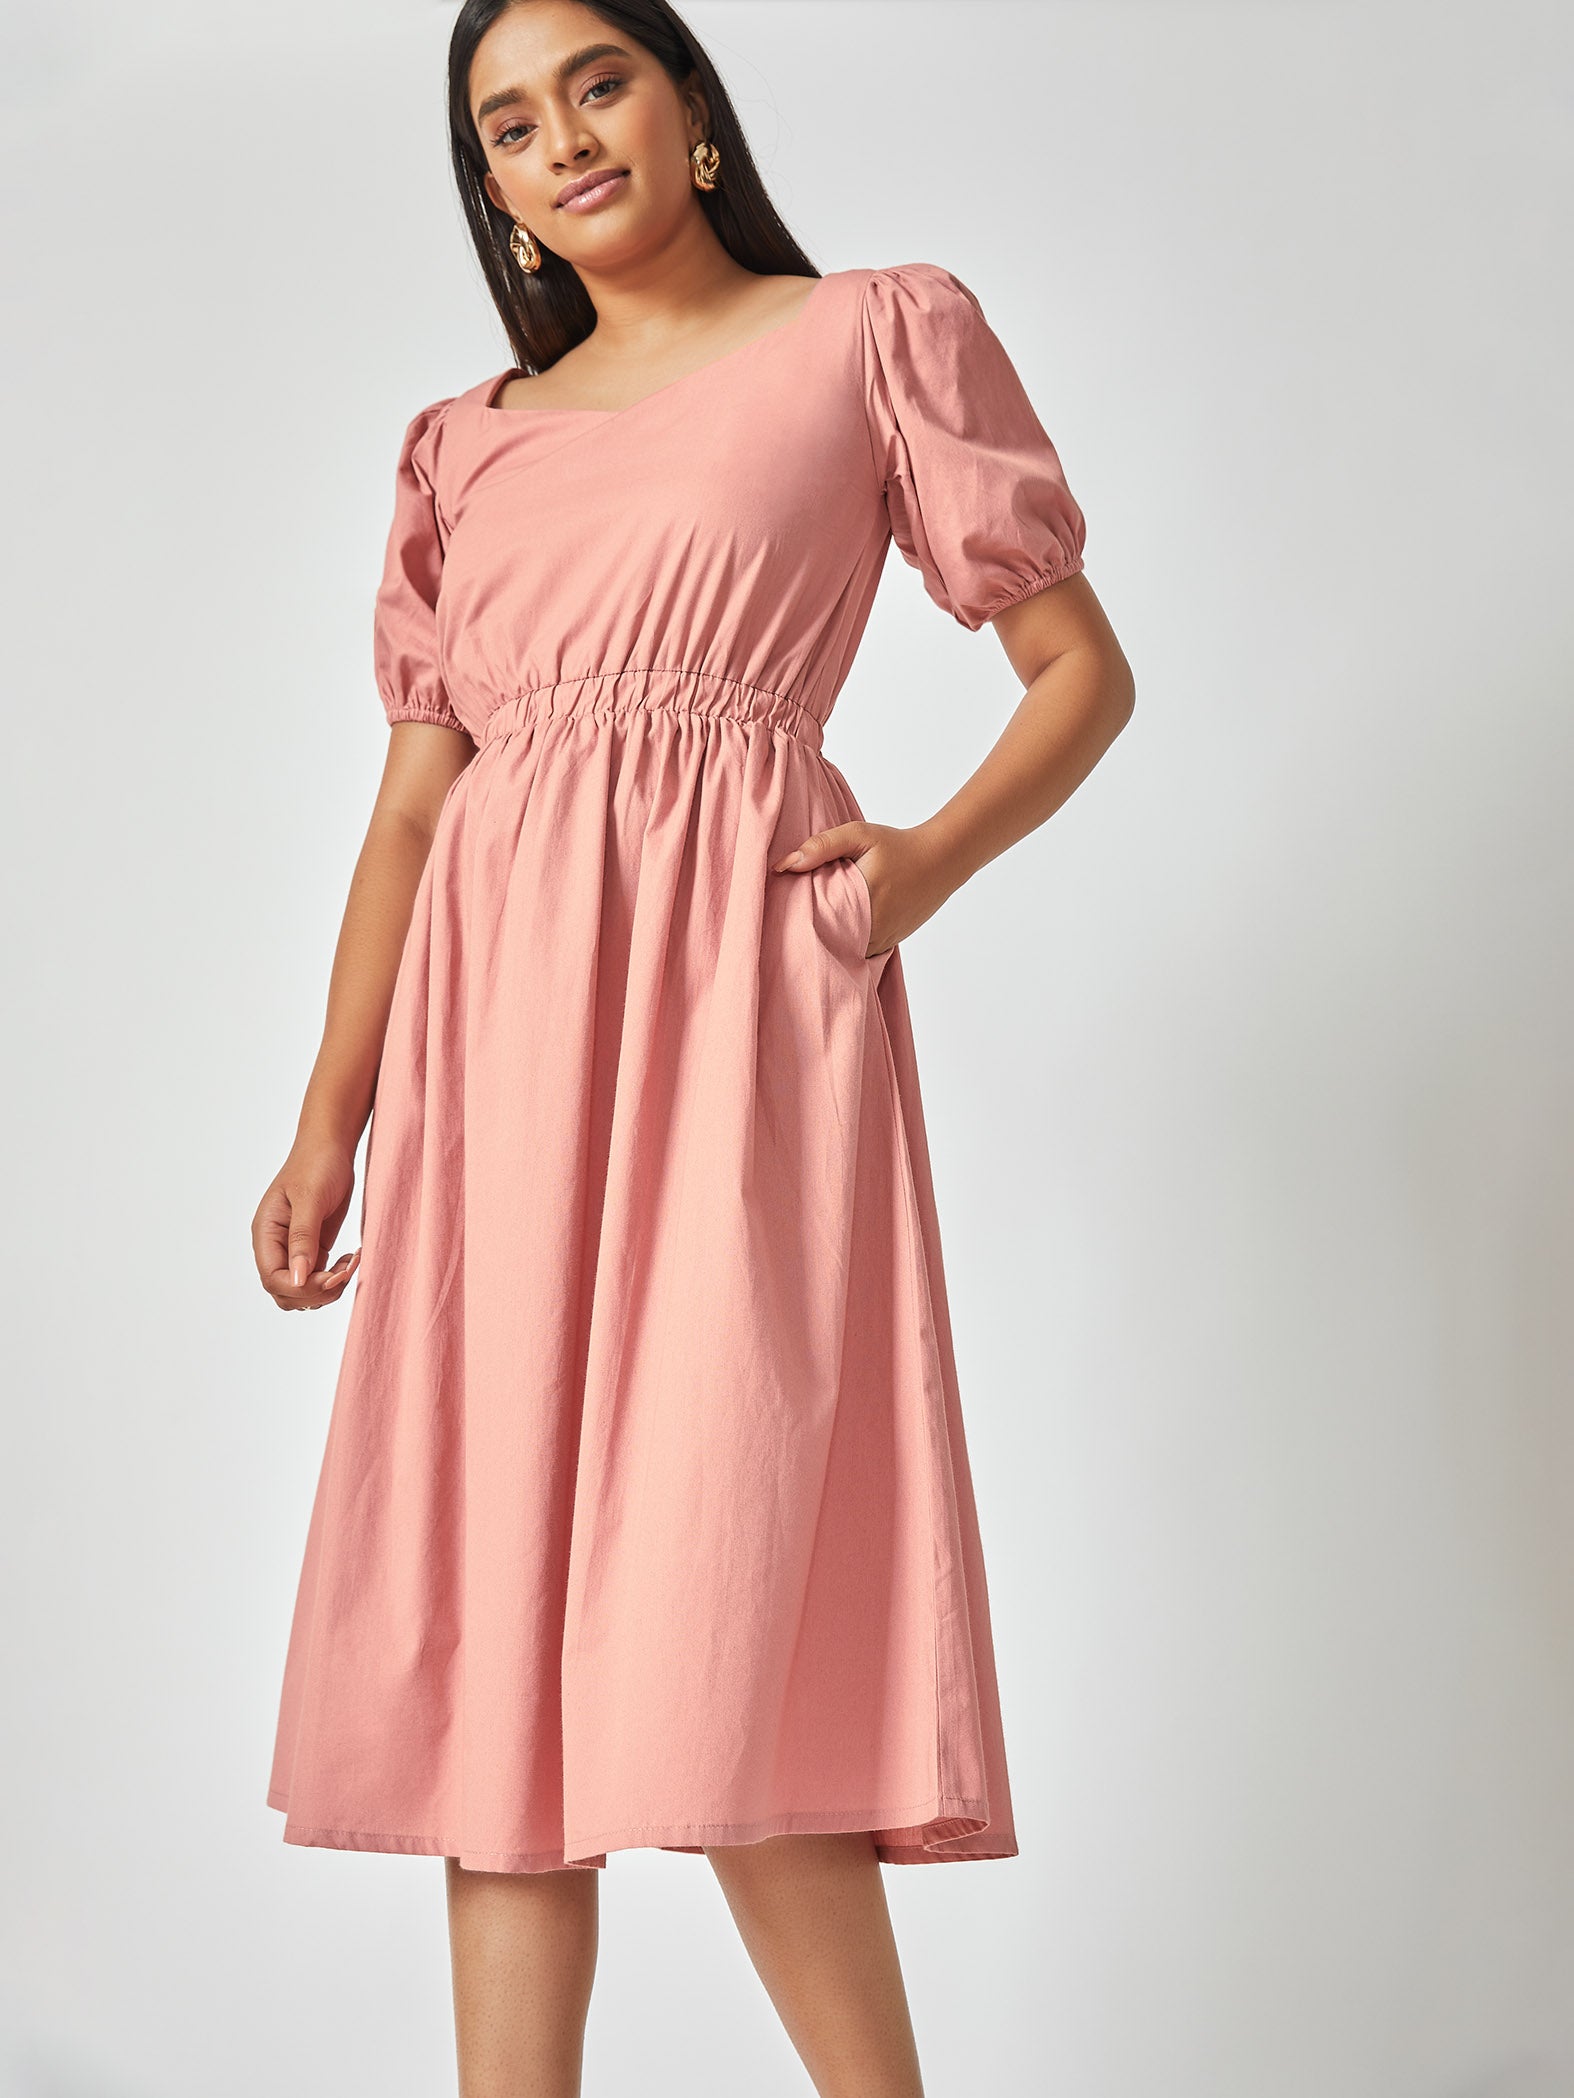 Blush Puff Sleeve Cinched Dress